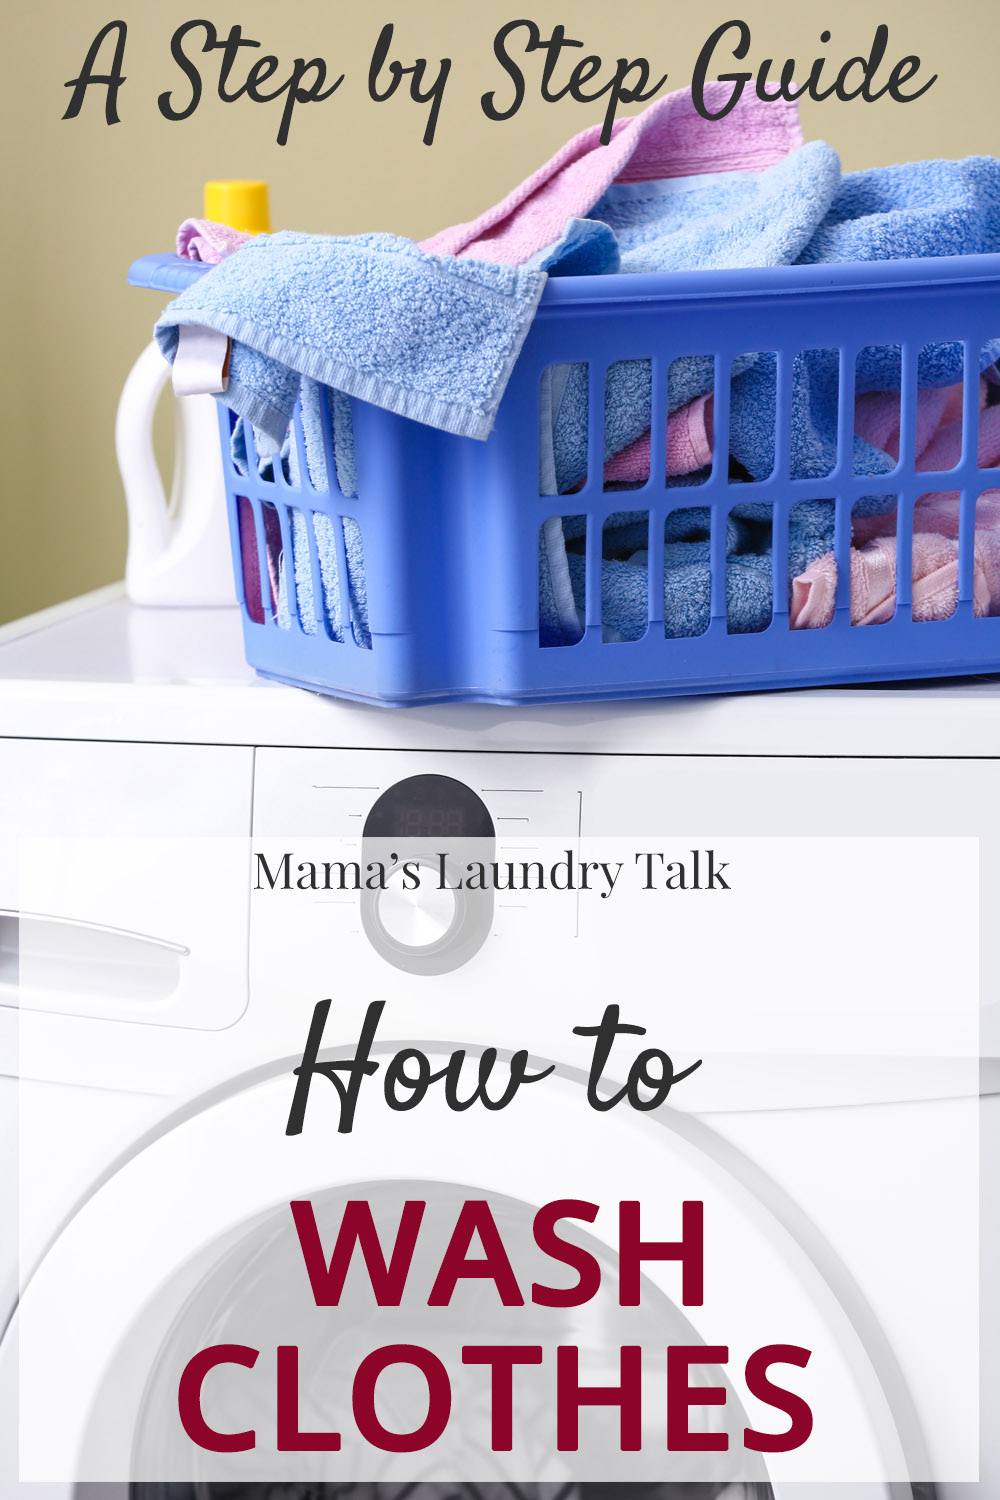 steps in washing clothes using washing machine